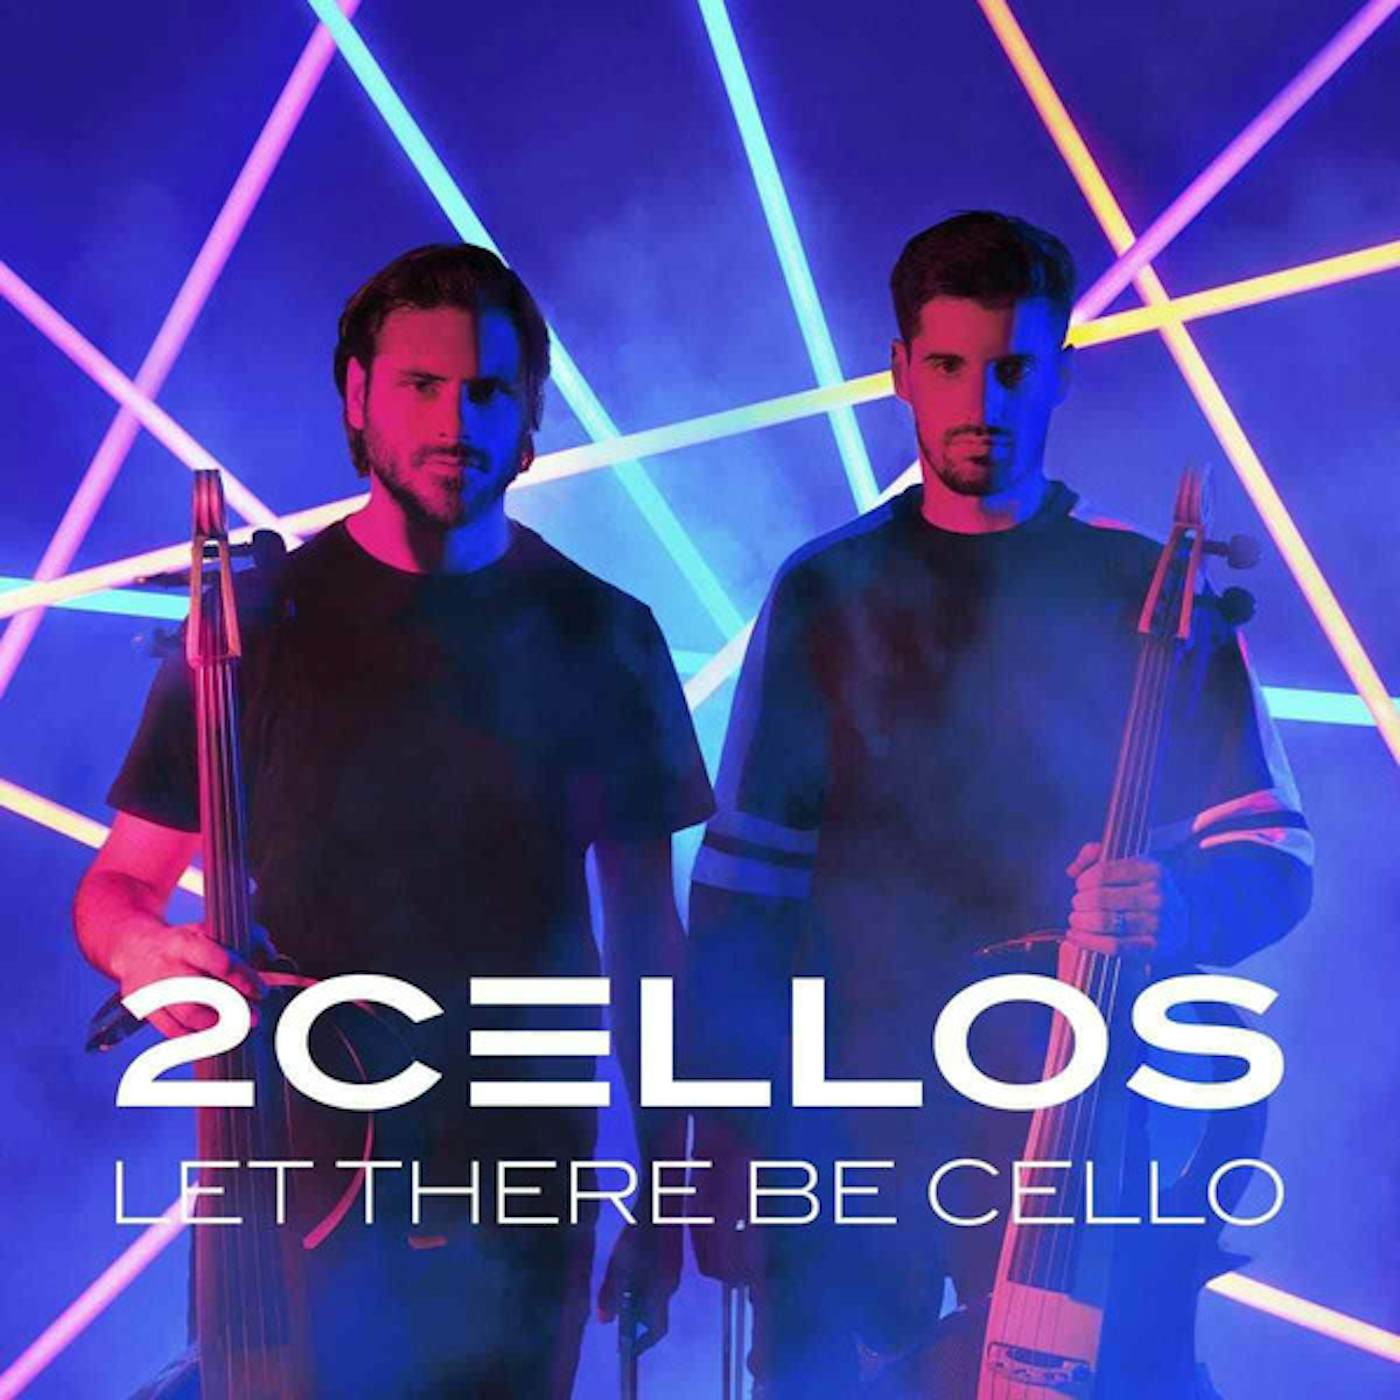 2 Cellos Let There Be Cello Vinyl Record